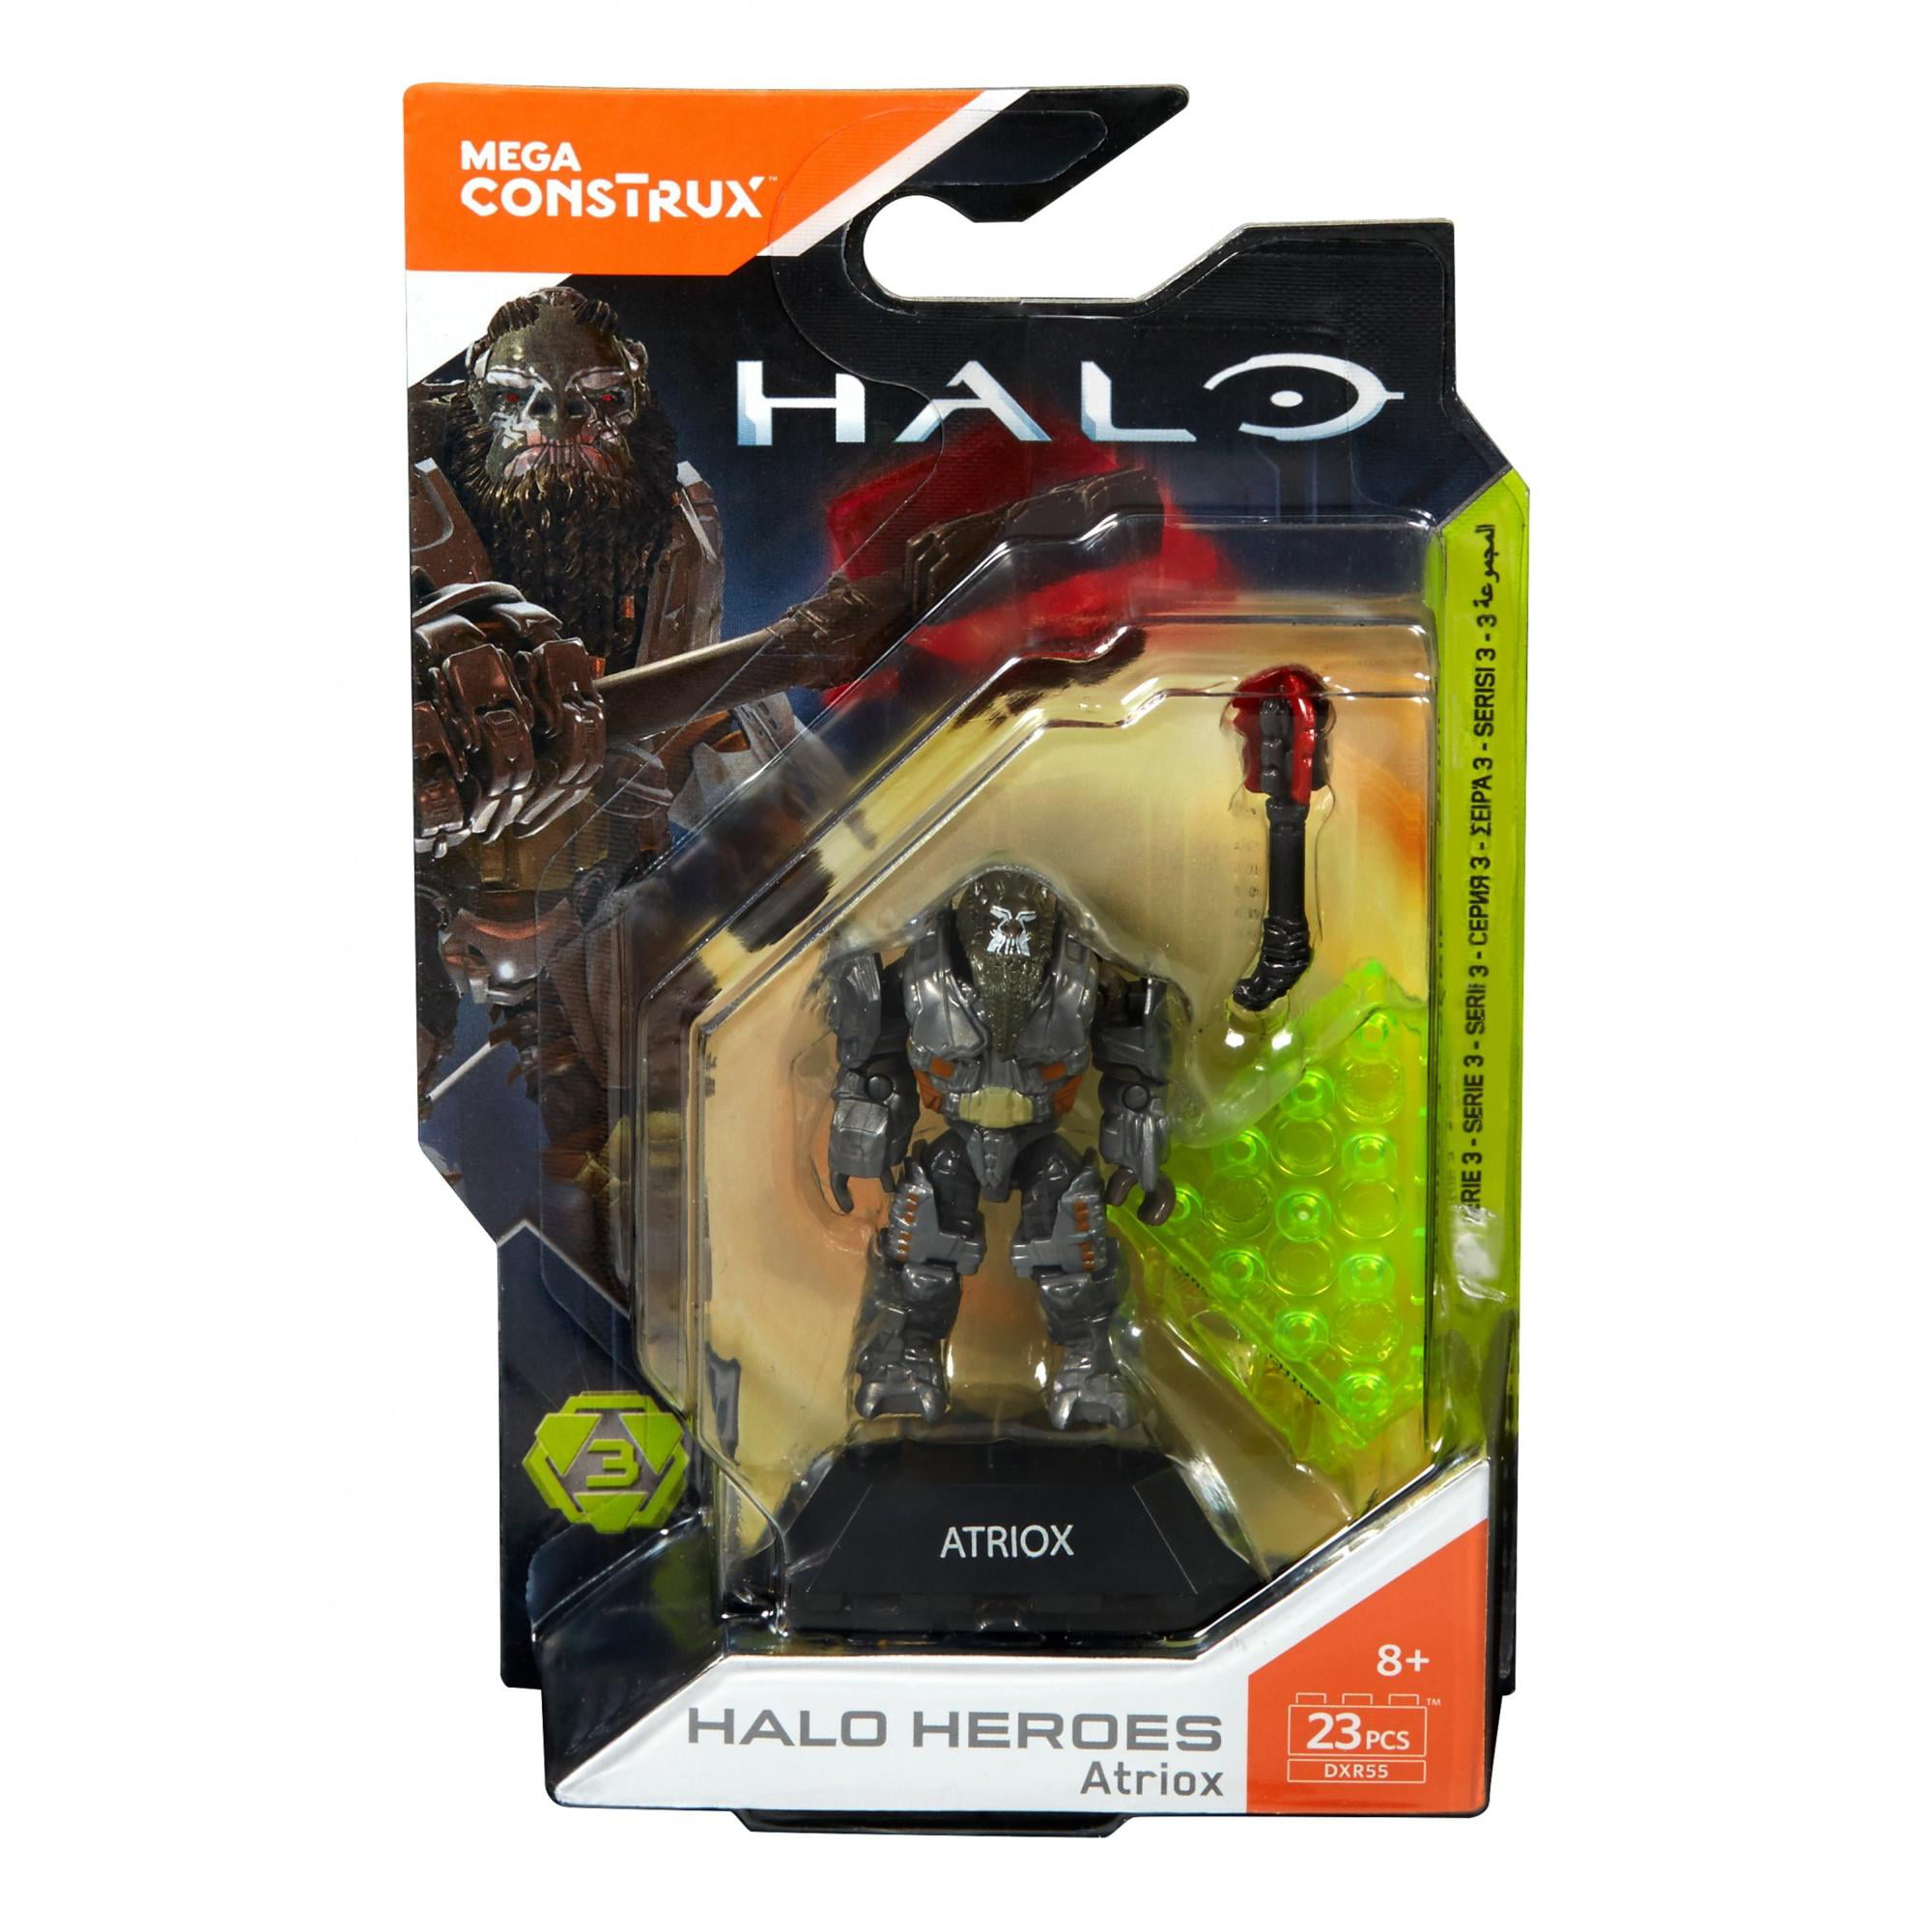 Mega Construx Halo Atriox Building Set - Walmart.com